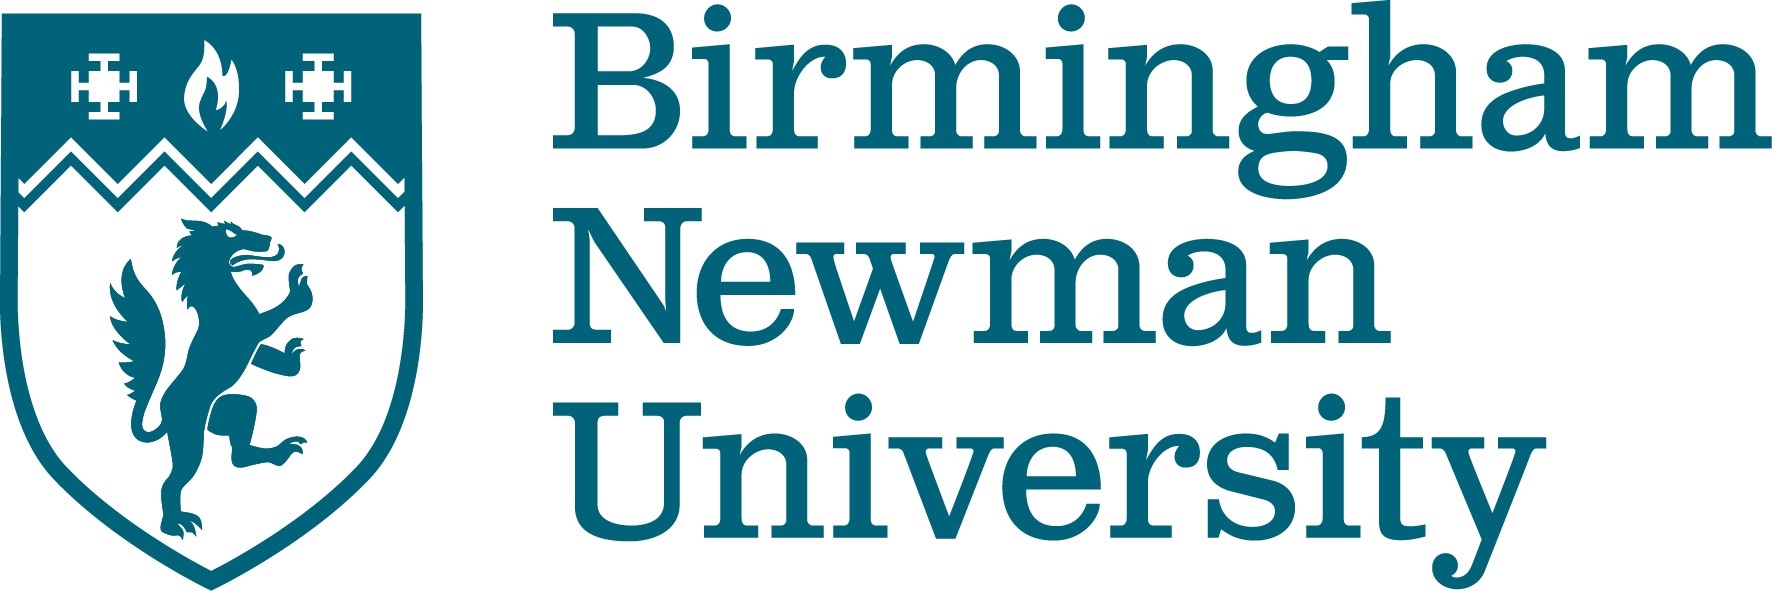 Birmingham Newman University Repository